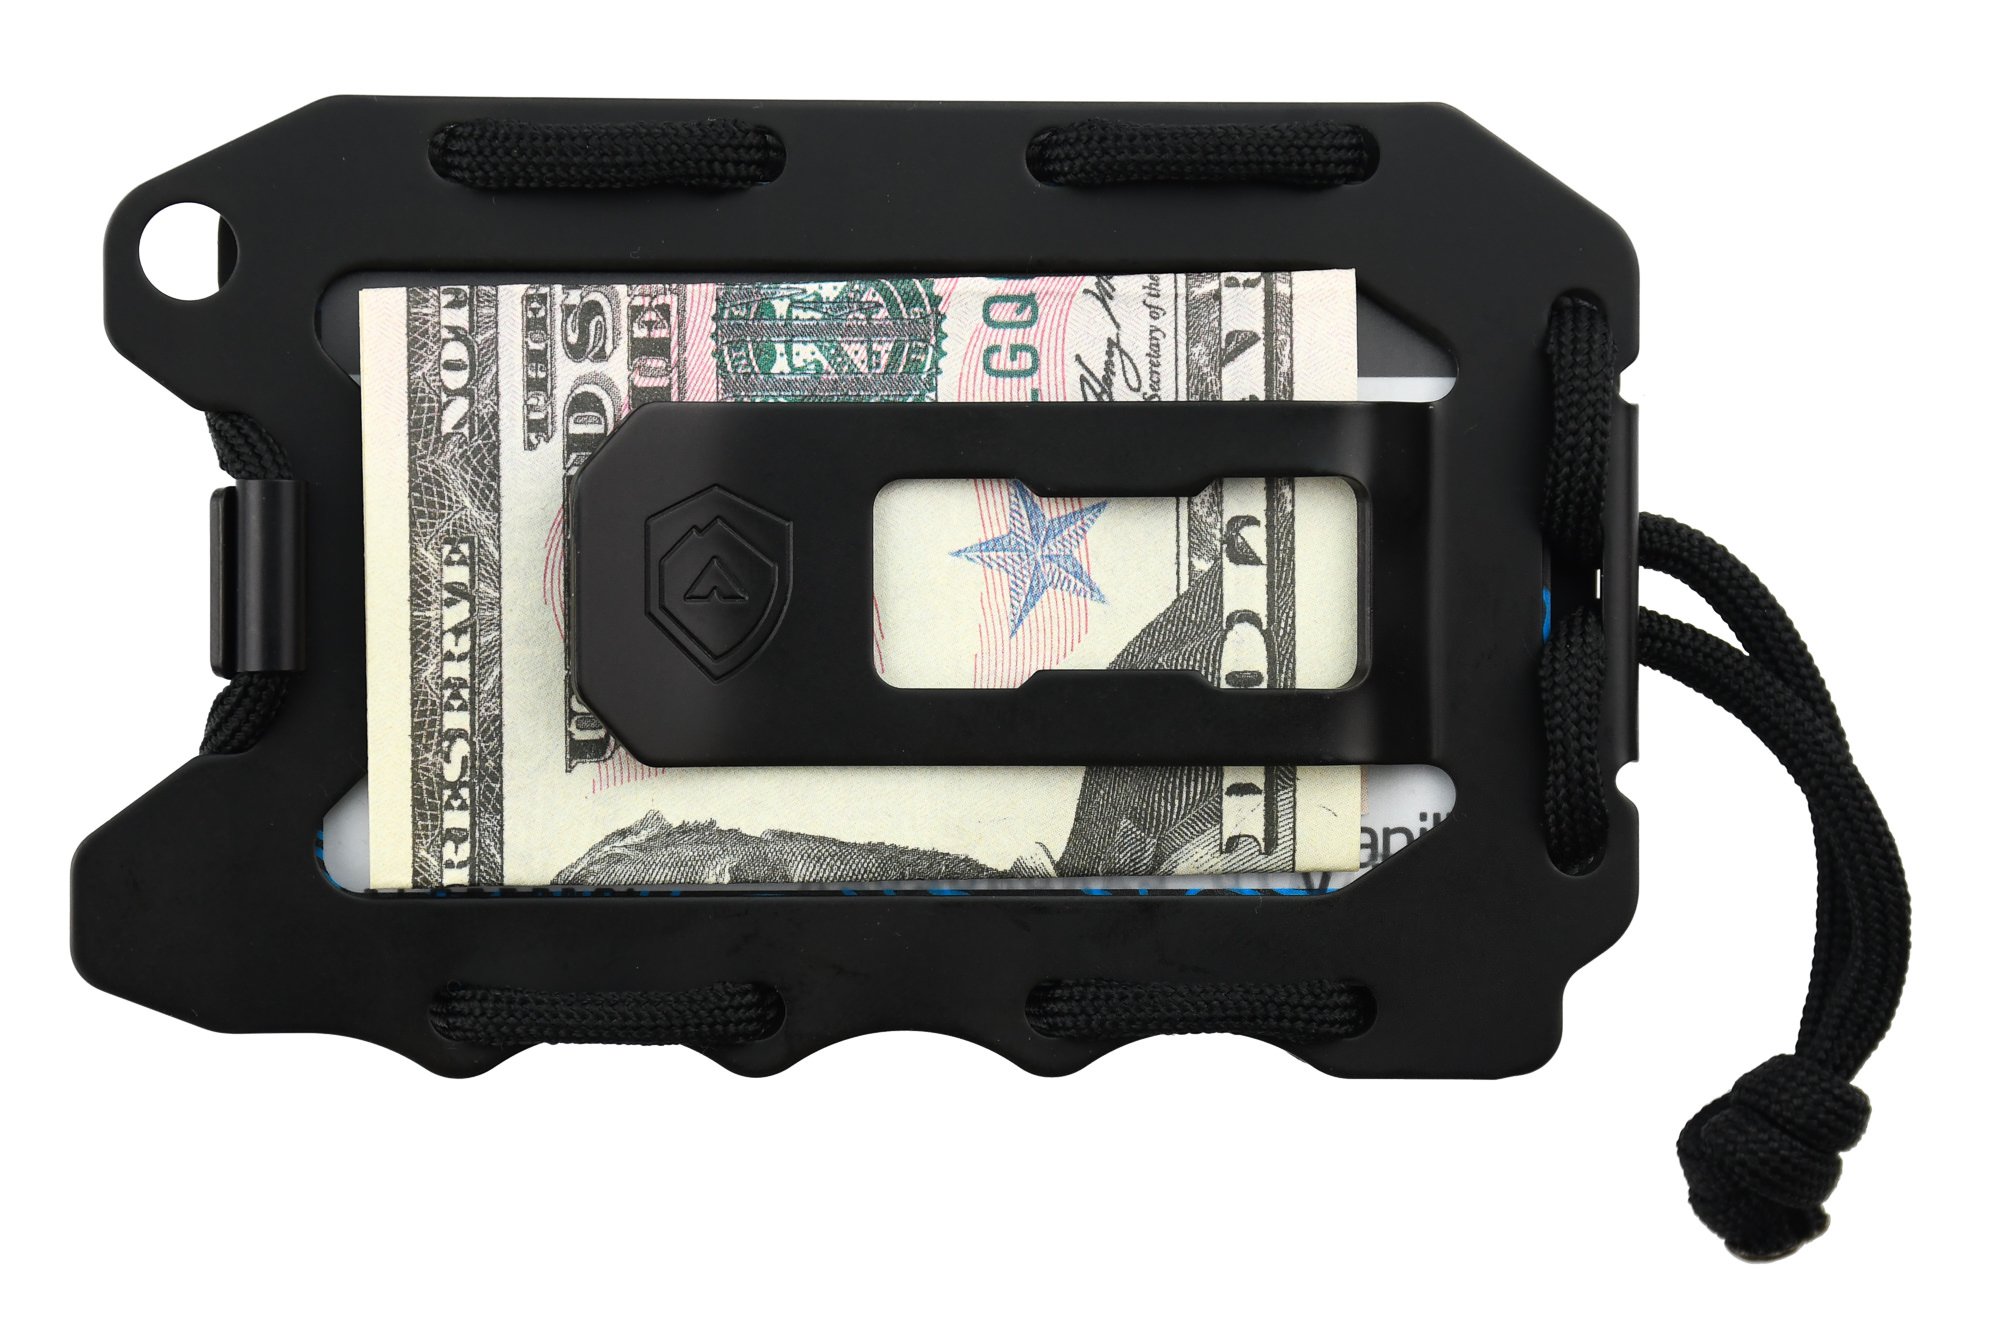 Trayvax 2.0 metal EDC wallet